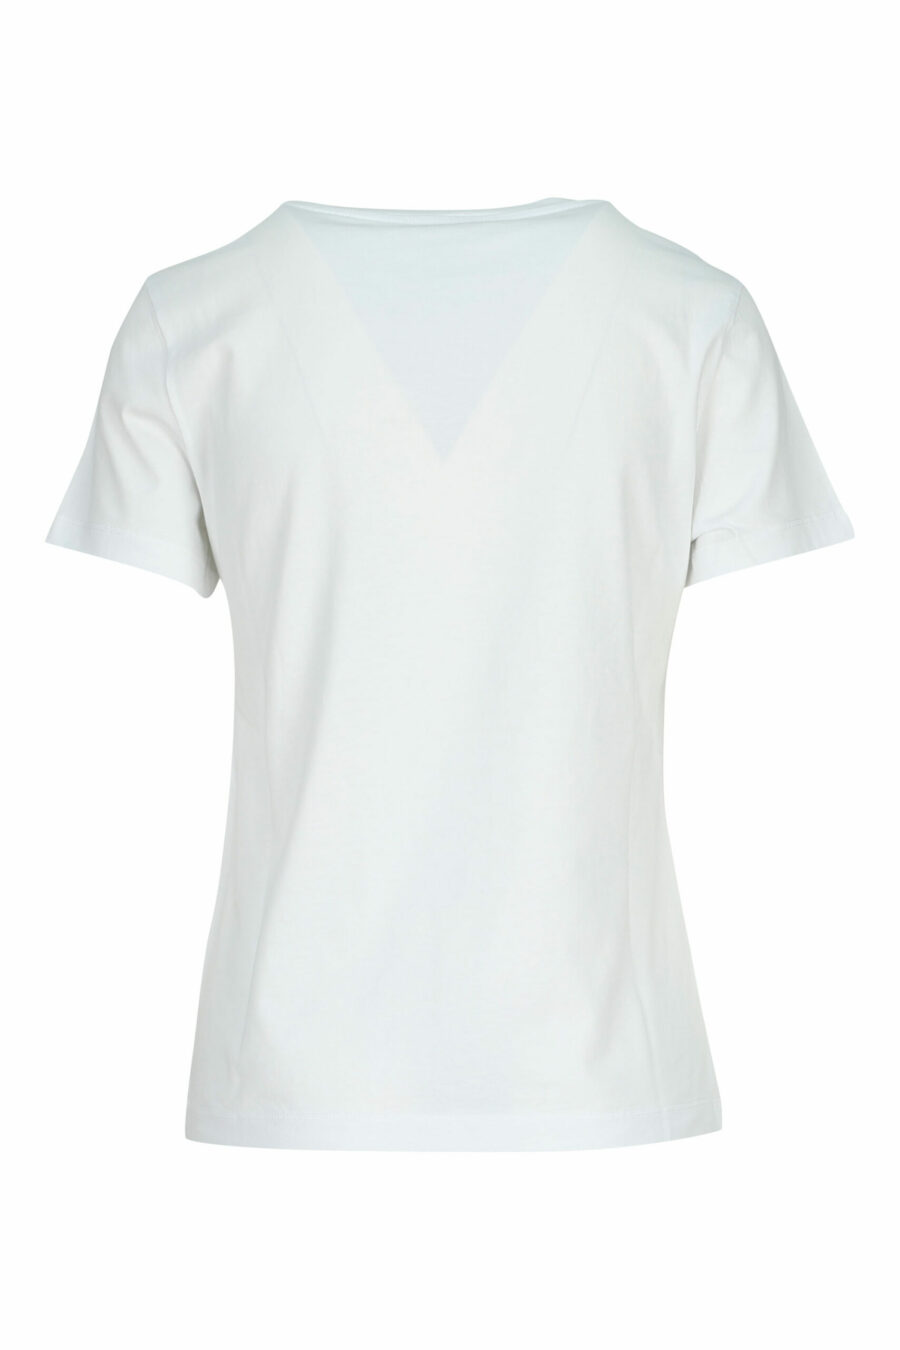 Camiseta blanca con minilogo "kenzo boke flower" blanco - 3612230587748 1 scaled